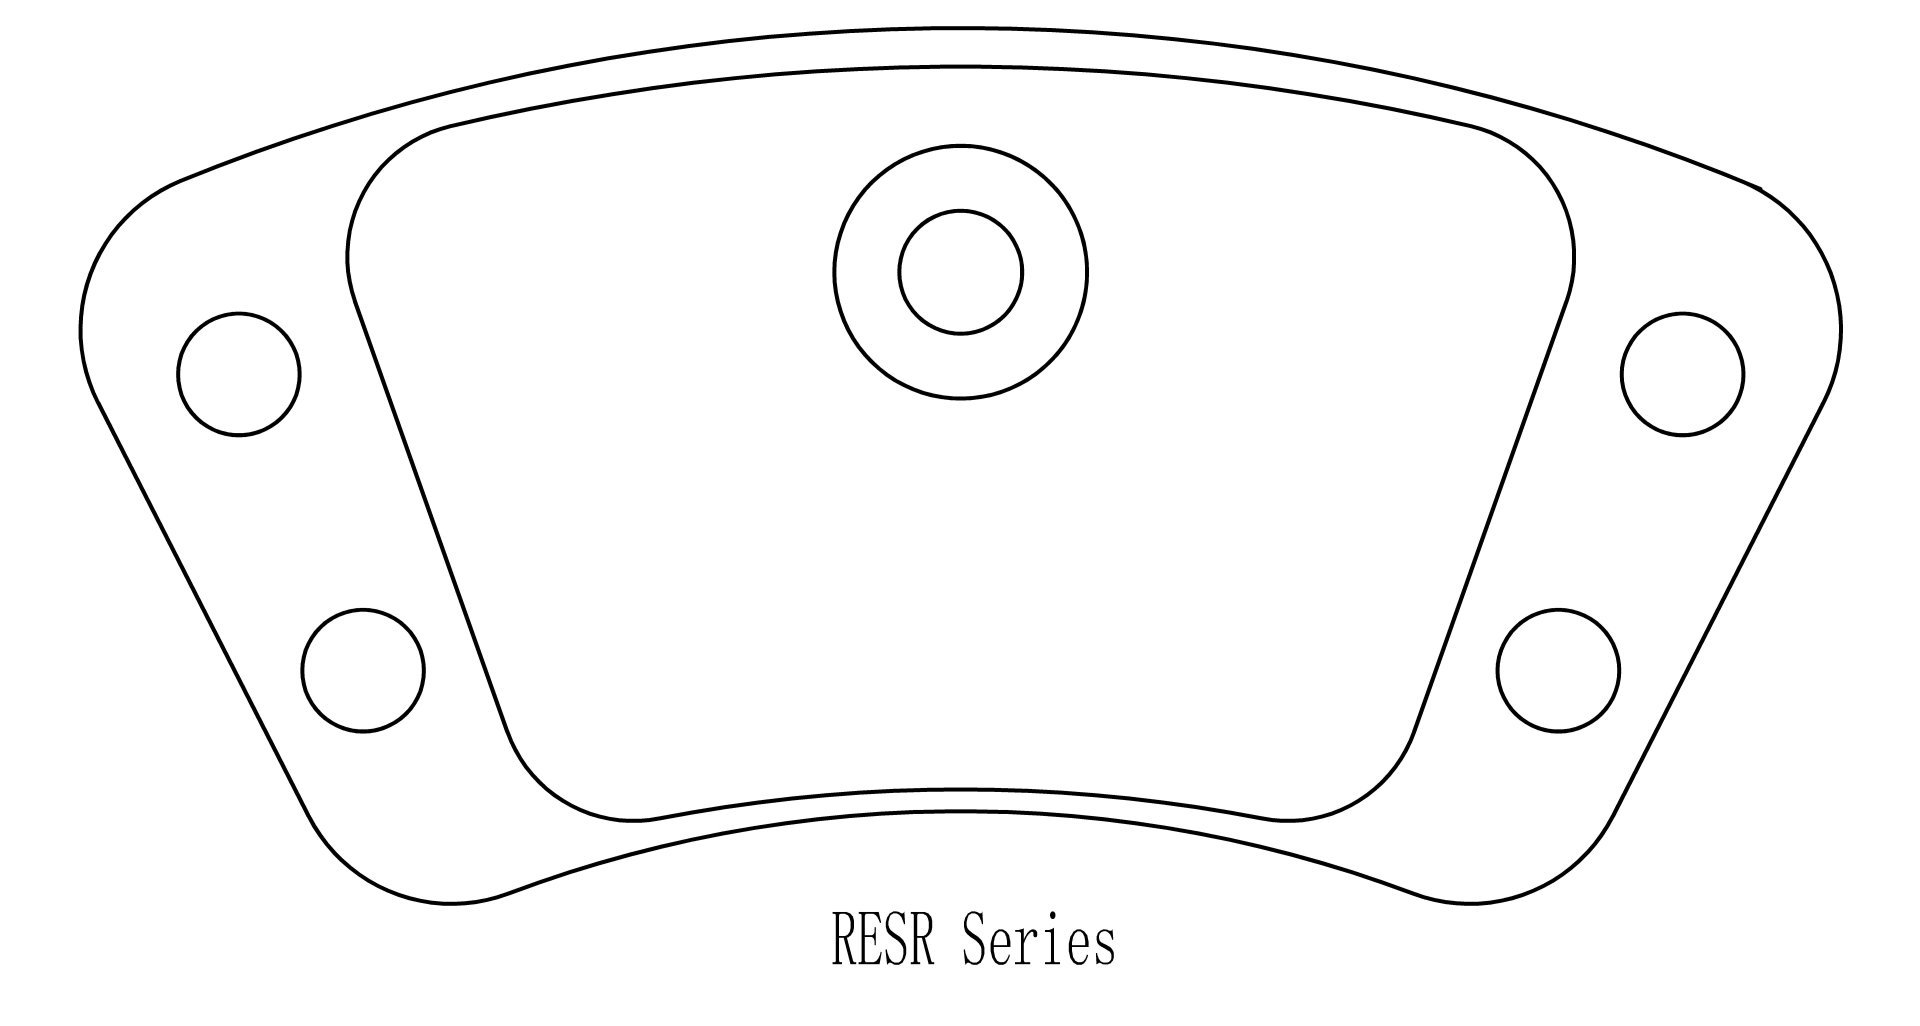 RESR series